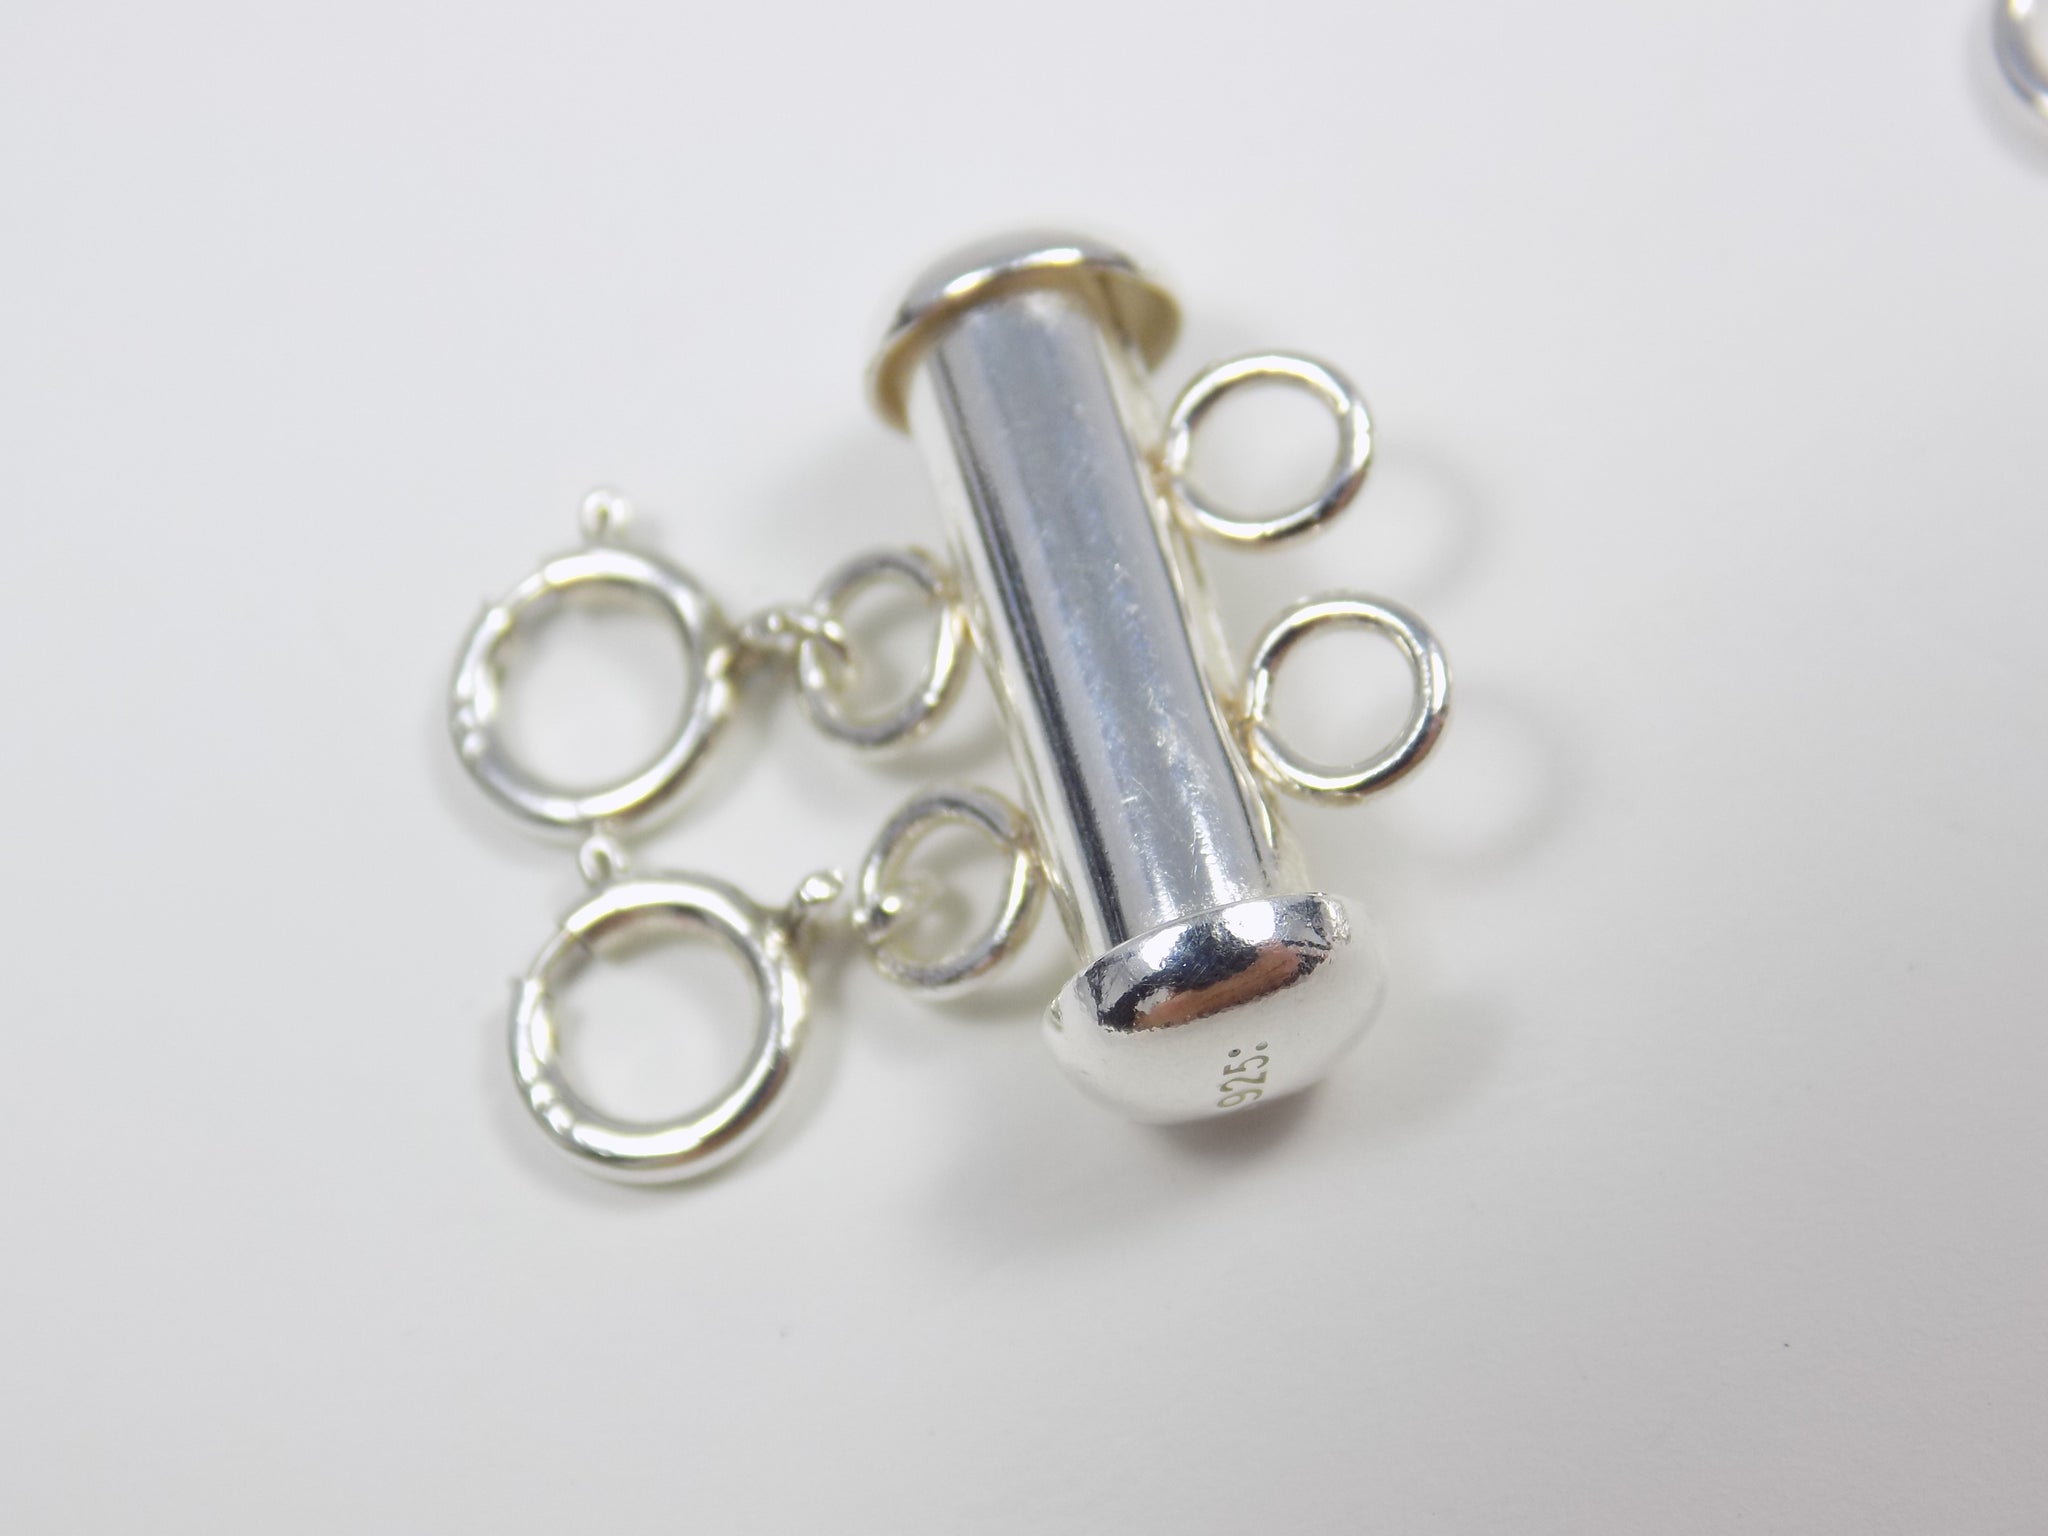 Open Jump Ring 925 Sterling Silver 22ga 0.64x3.0mm Jump Rings (20 pcs)